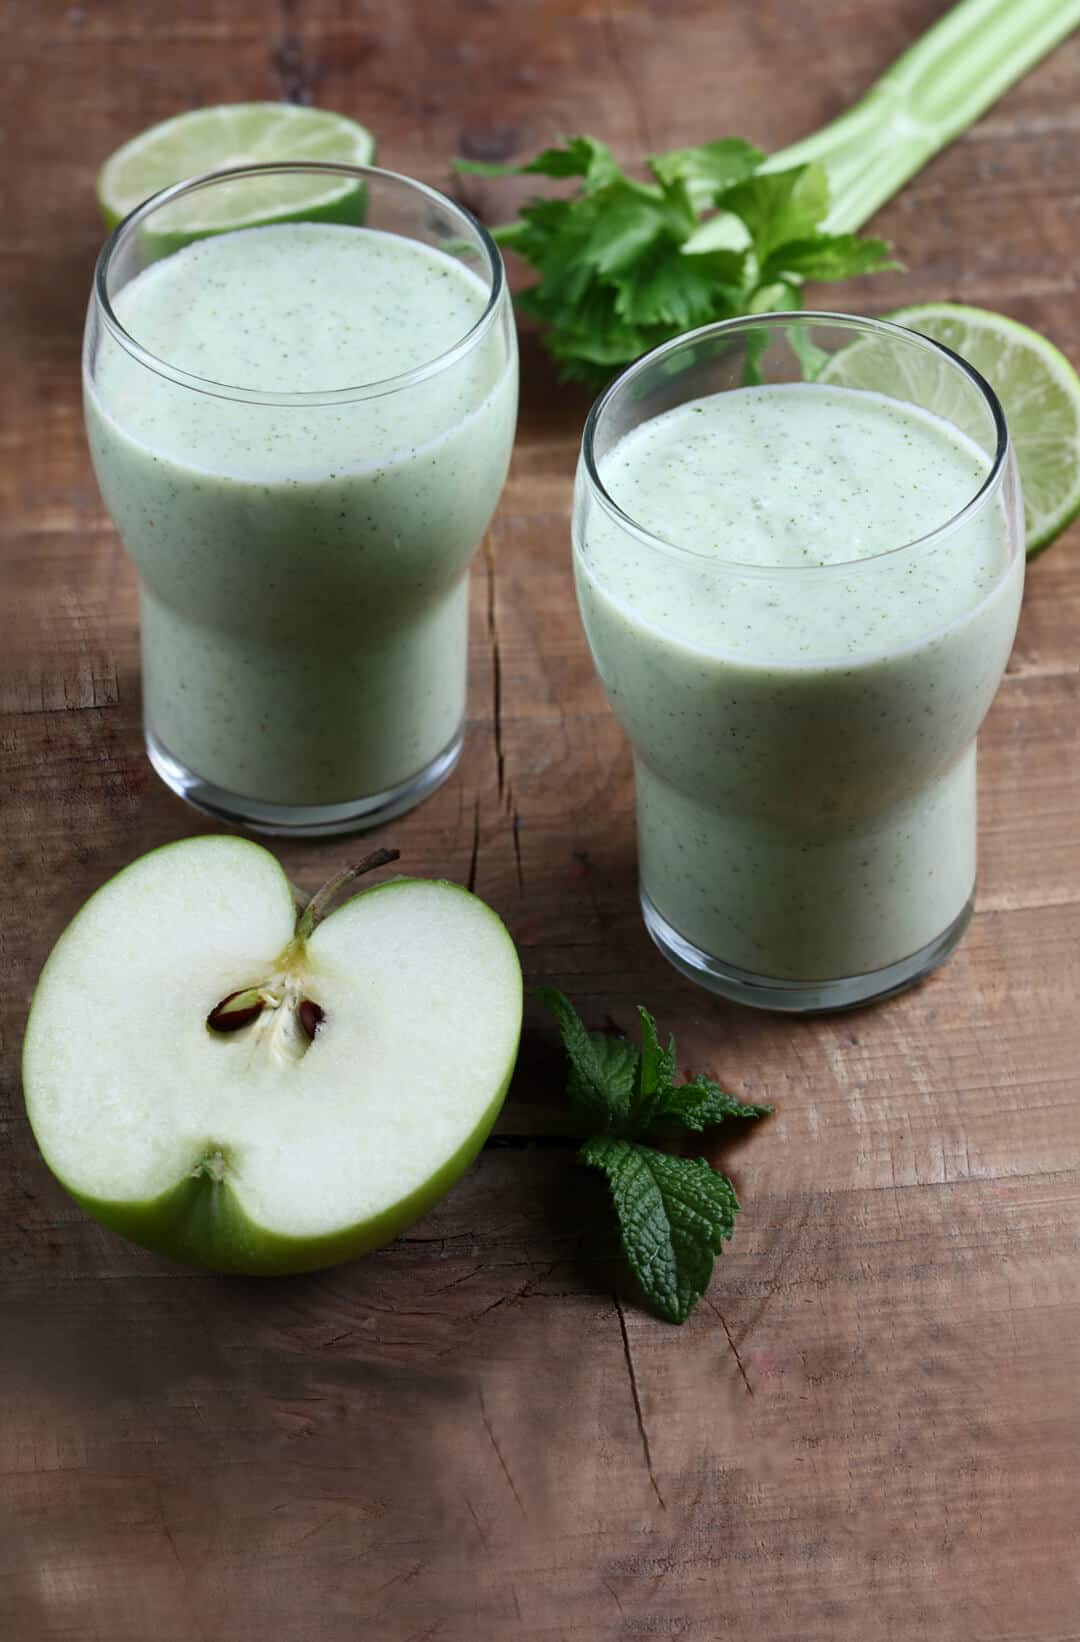 Apple celery smoothie made with Braun Jug blender